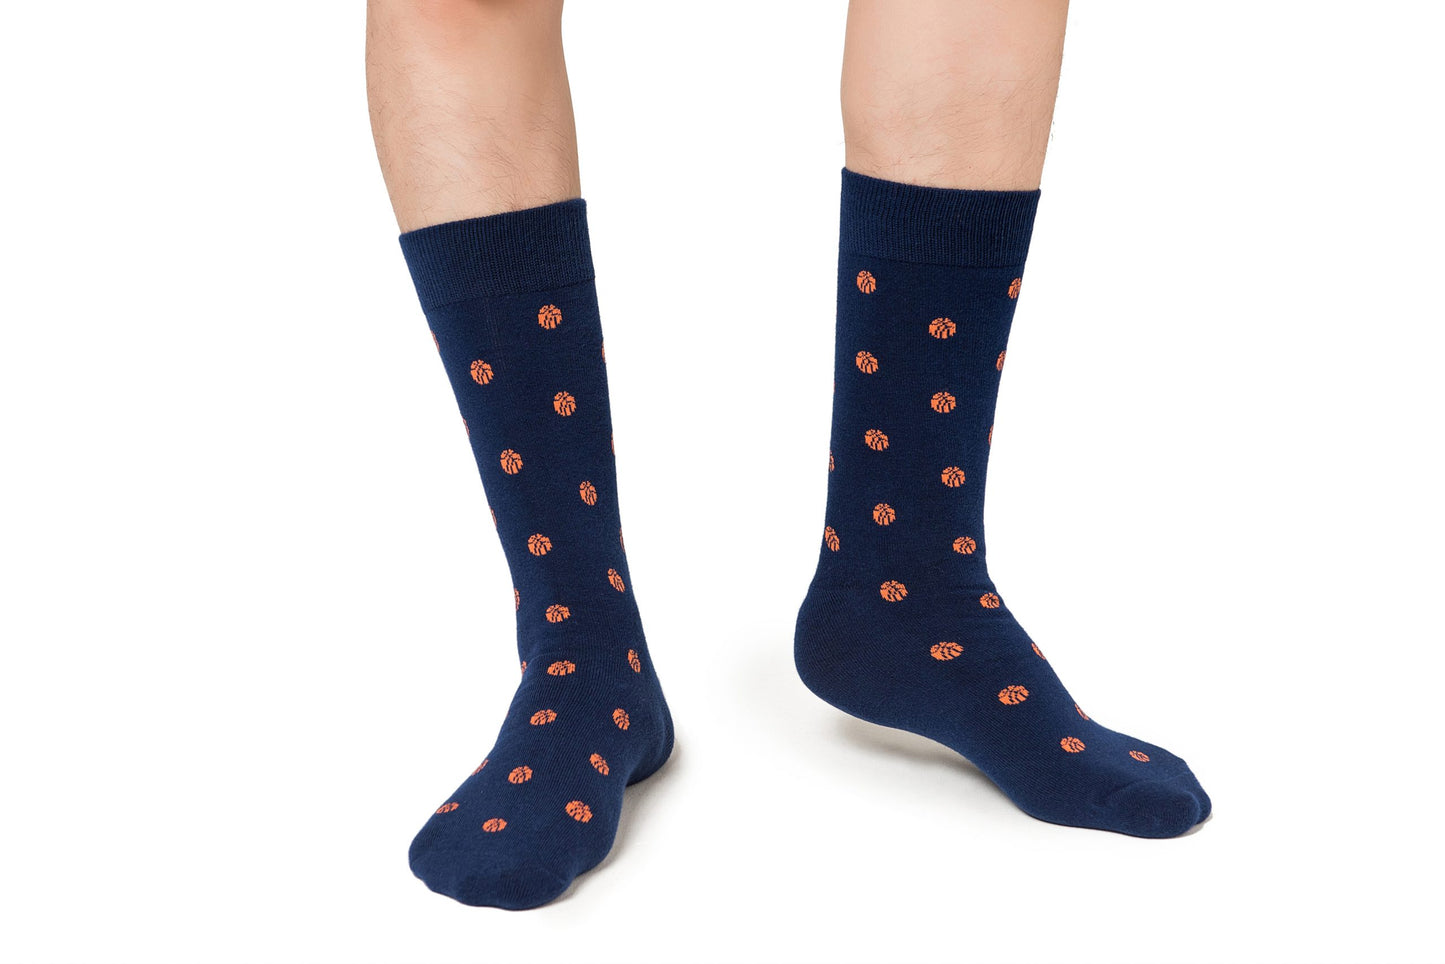 A pair of legs wearing basketball socks.